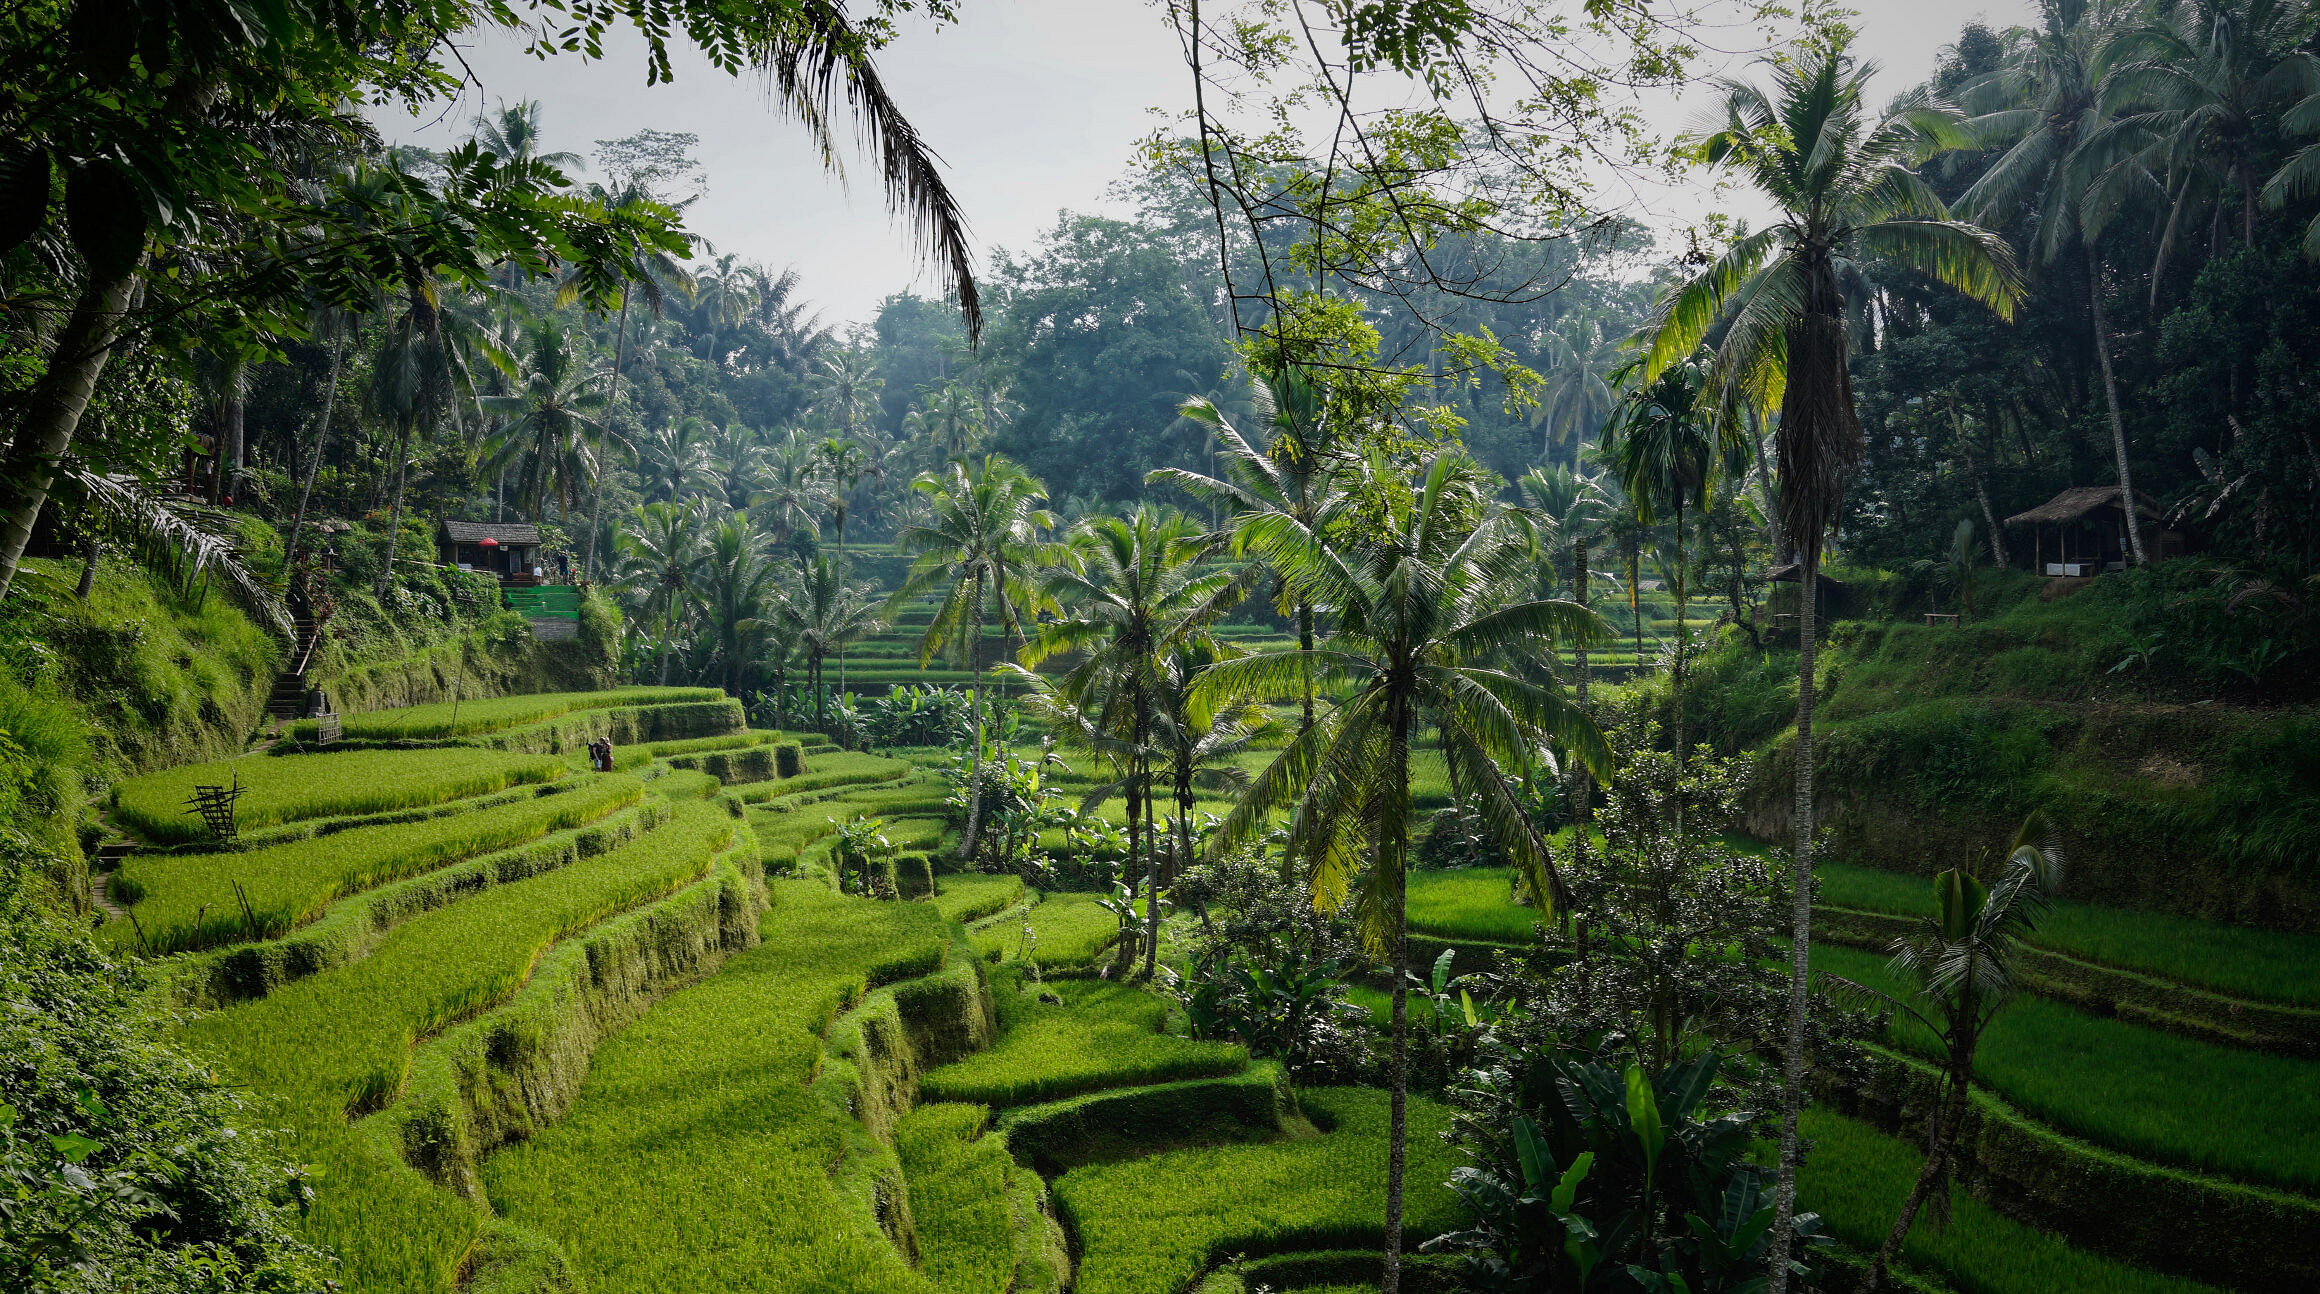 Ubud rice terraces in Bali, Indonesia